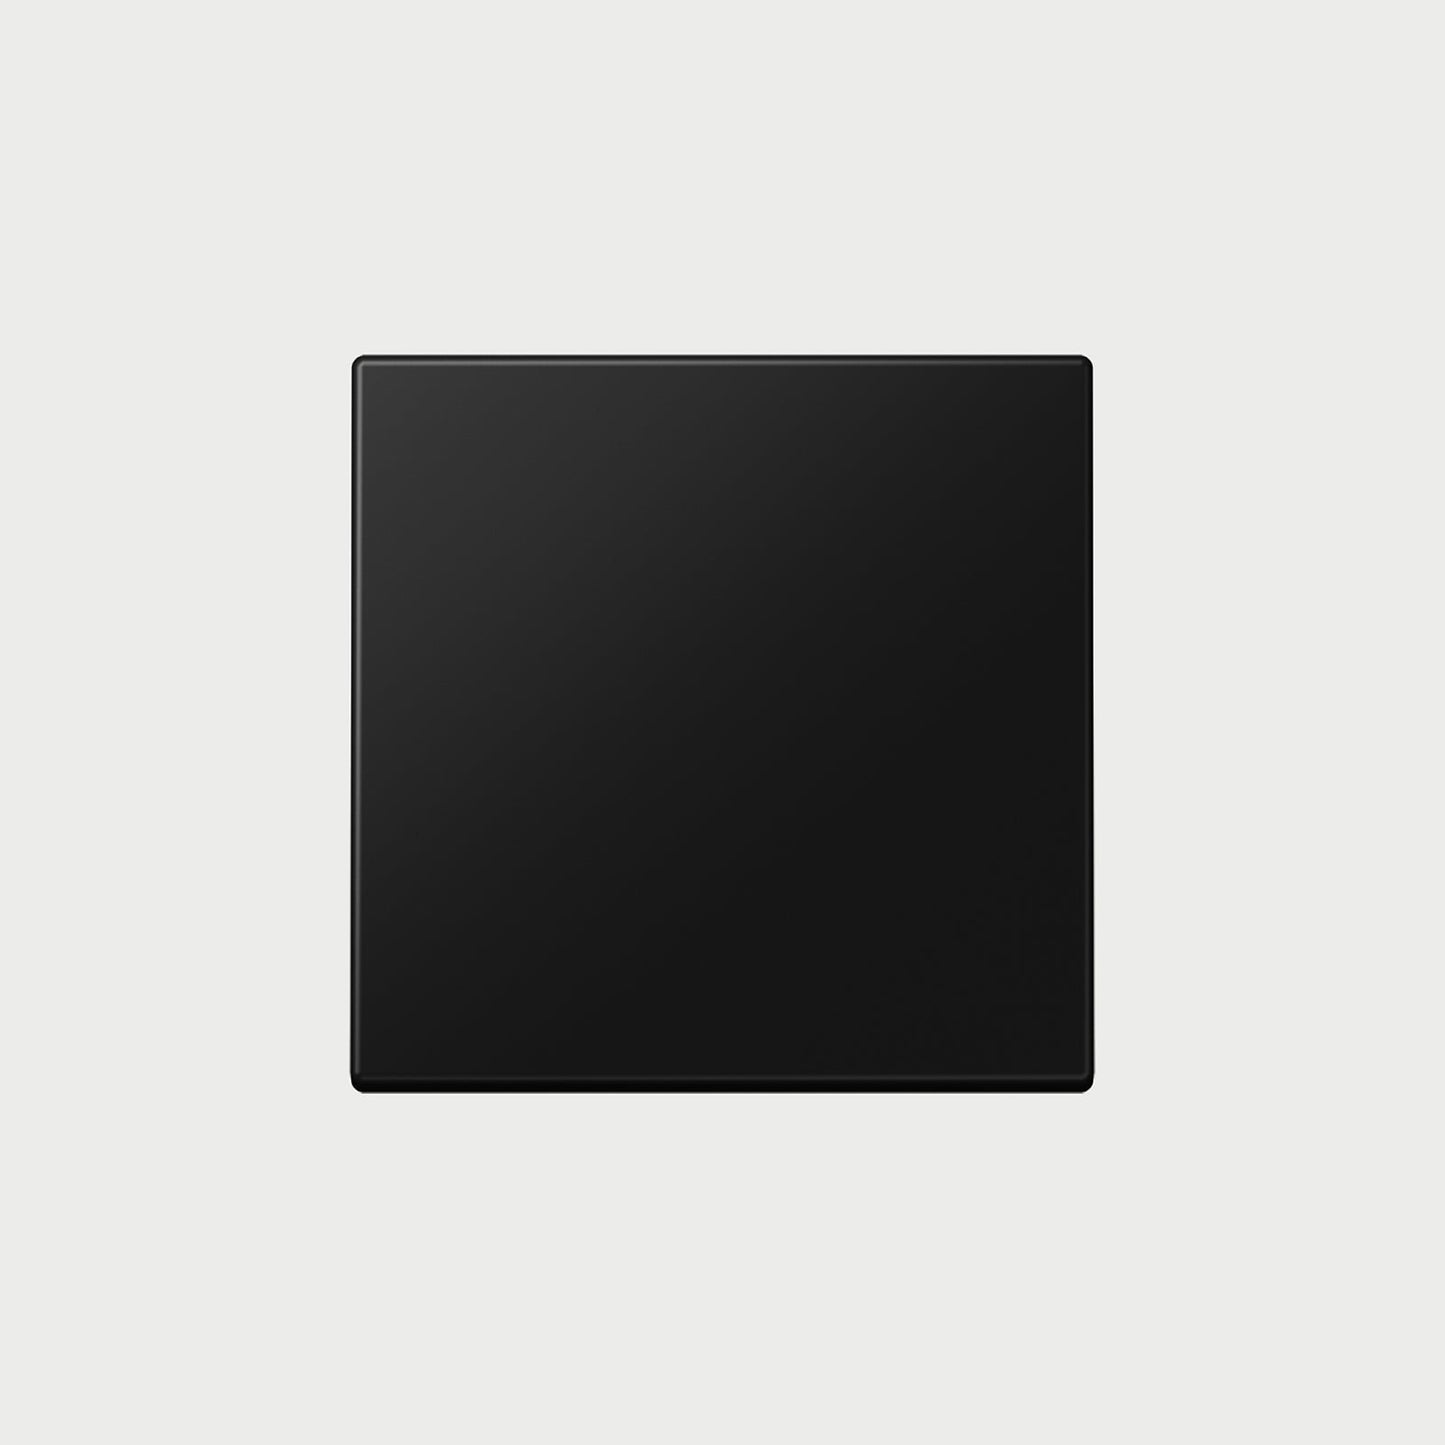 Ls1700 (Plastic) Matt Graphite Black Cover